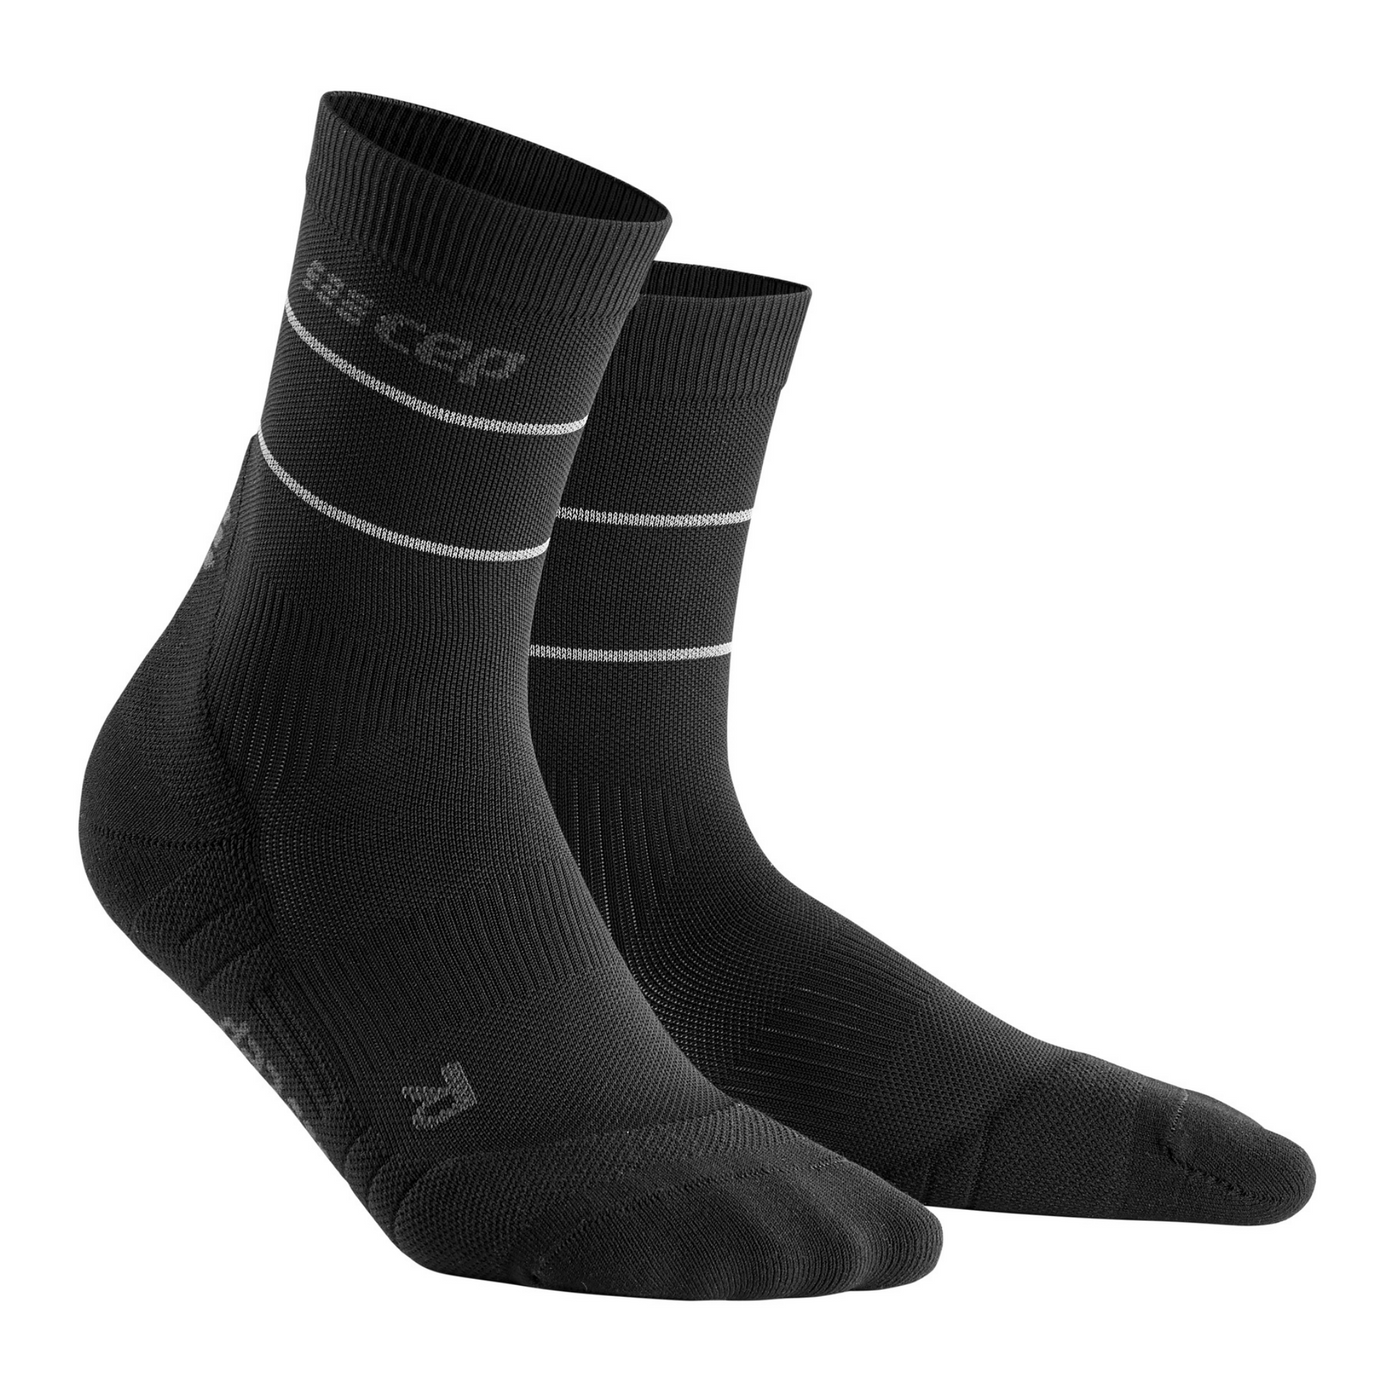 Reflective Mid Cut Compression Socks, Men, Black/Silver, Front View